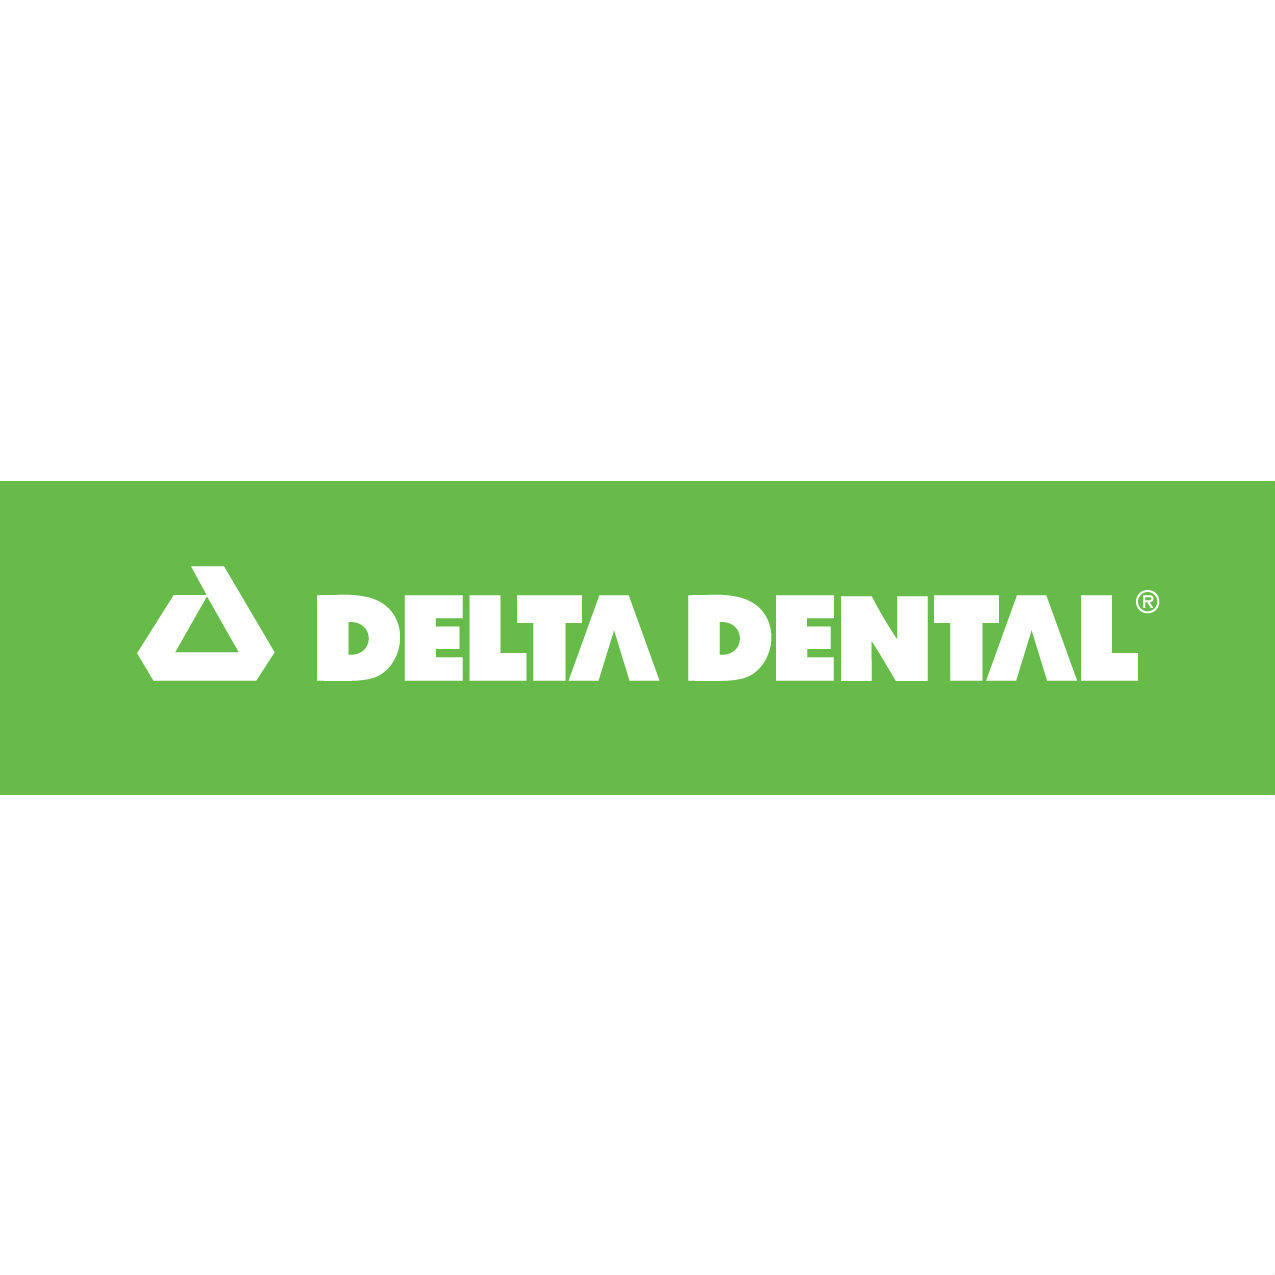 Delta Dental Logo - large and green